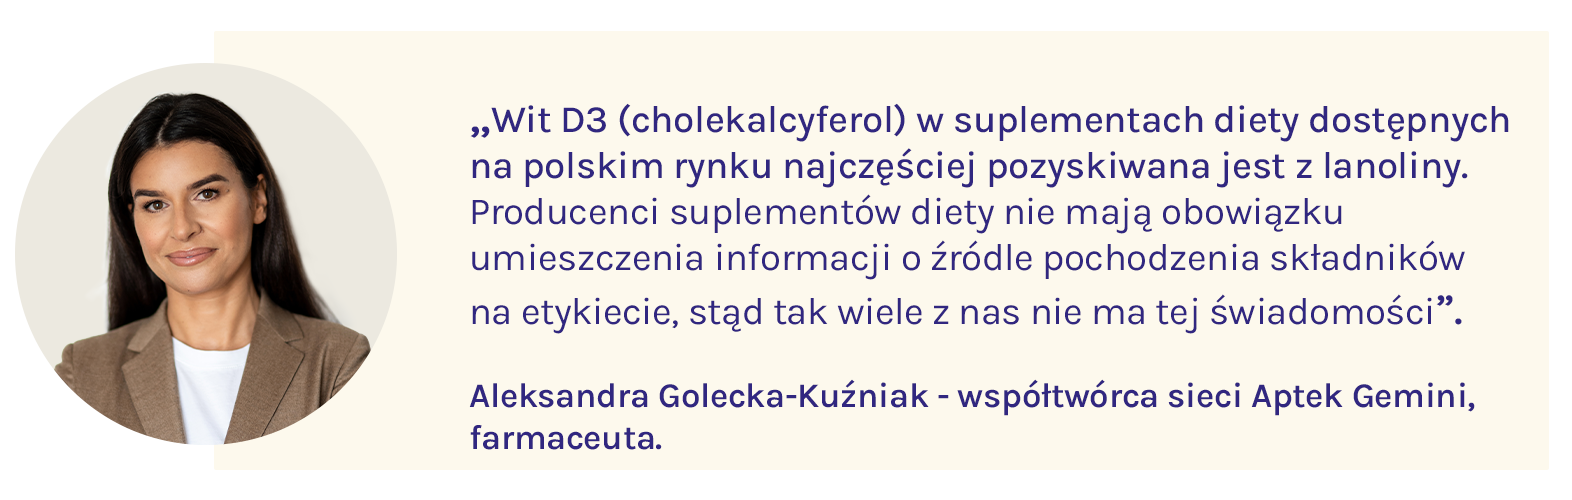 Aleksandra Golecka-Kuźniak says that vitamin D3 in dietary supplements most often comes from lanolin